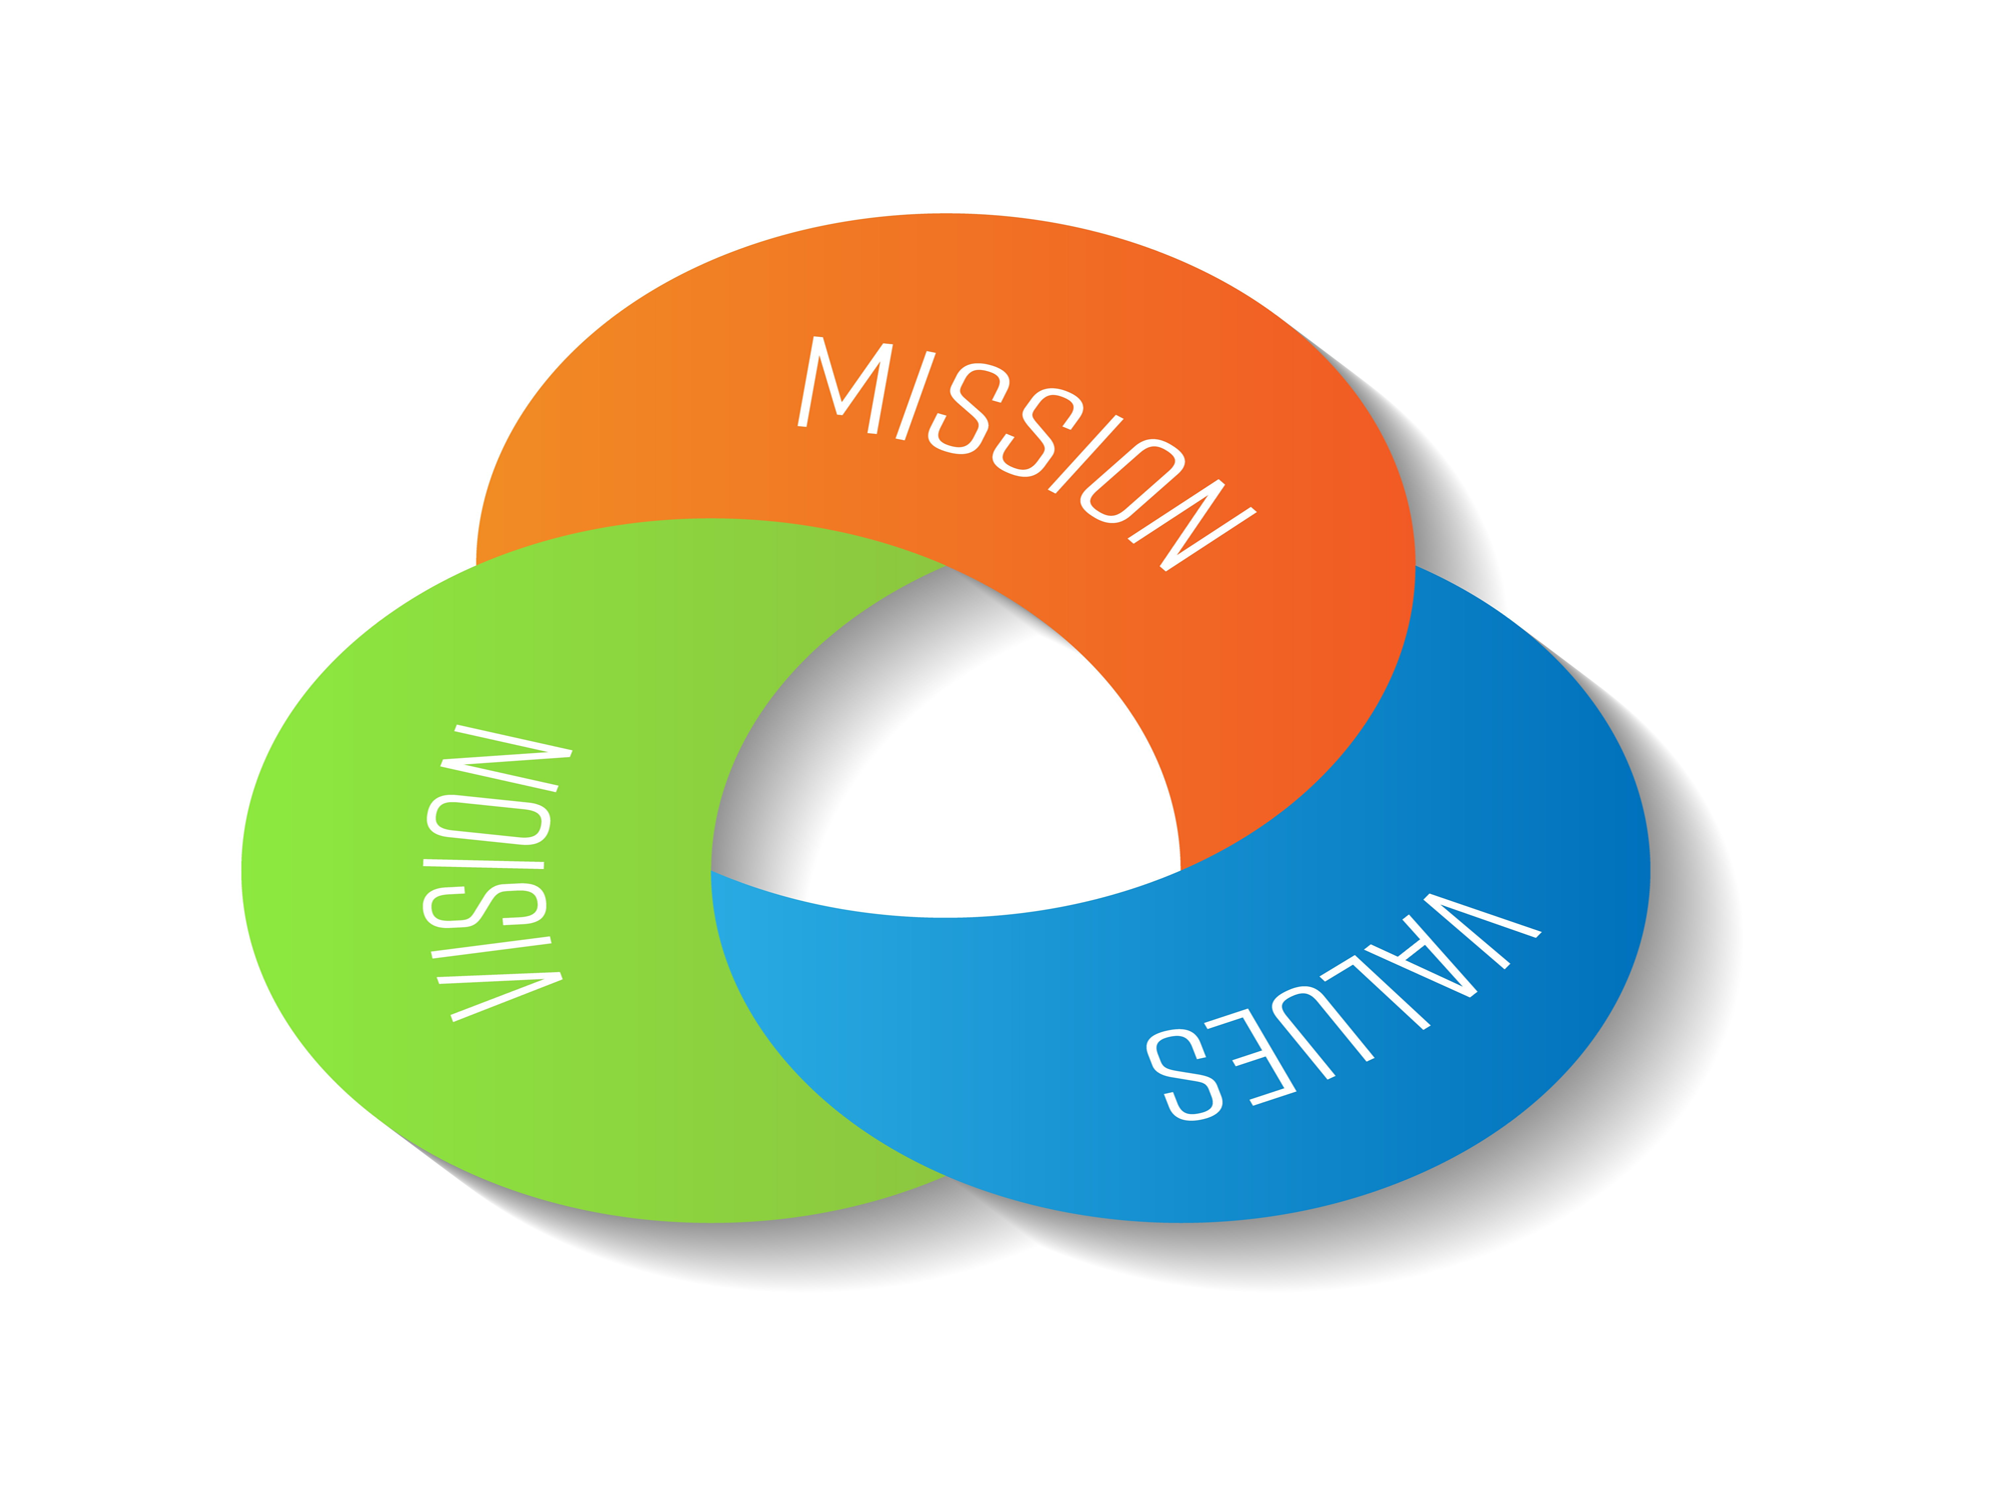 Airmec mission values vision